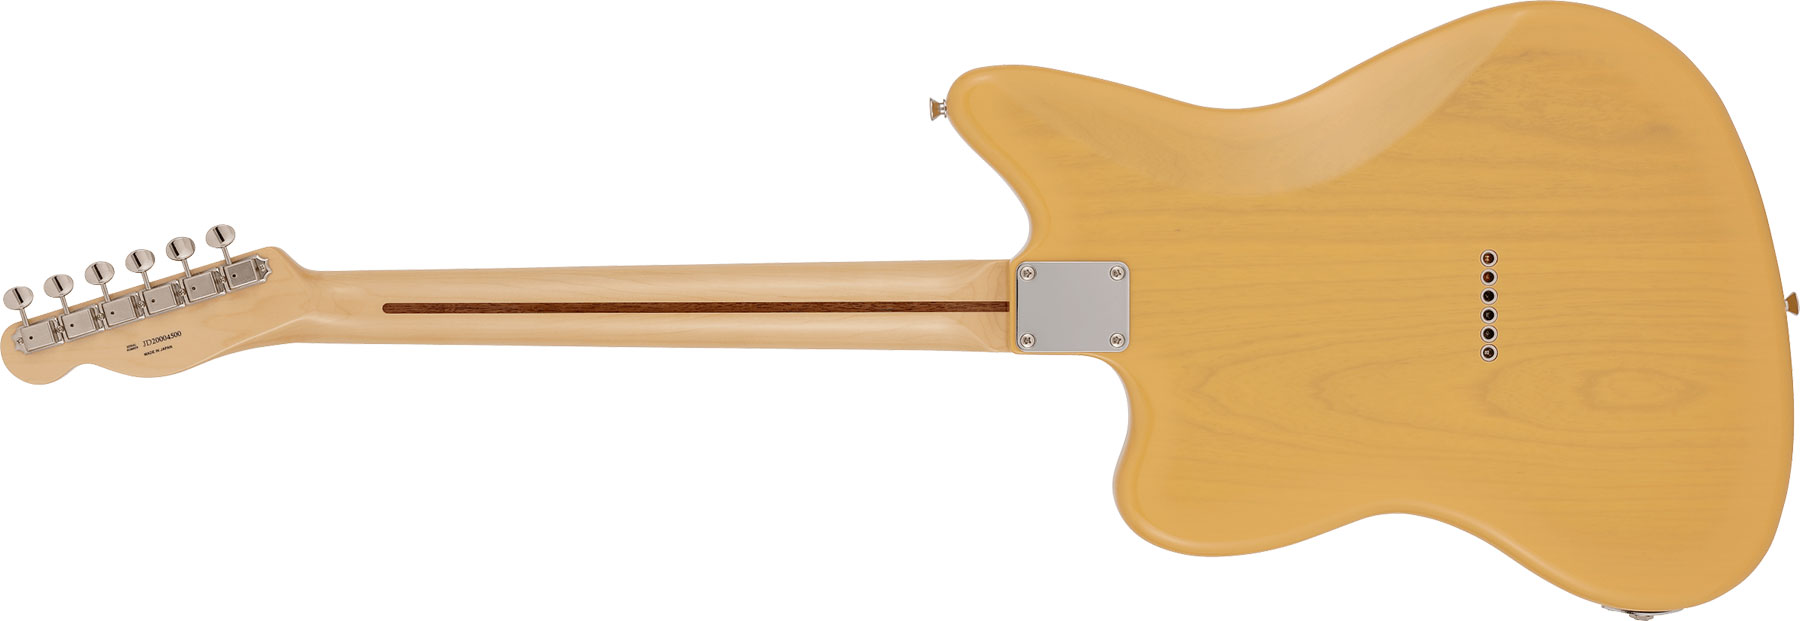 Fender Tele Offset Ltd Jap 2s Ht Mn - Butterscotch Blonde - Guitarra electrica retro rock - Variation 1